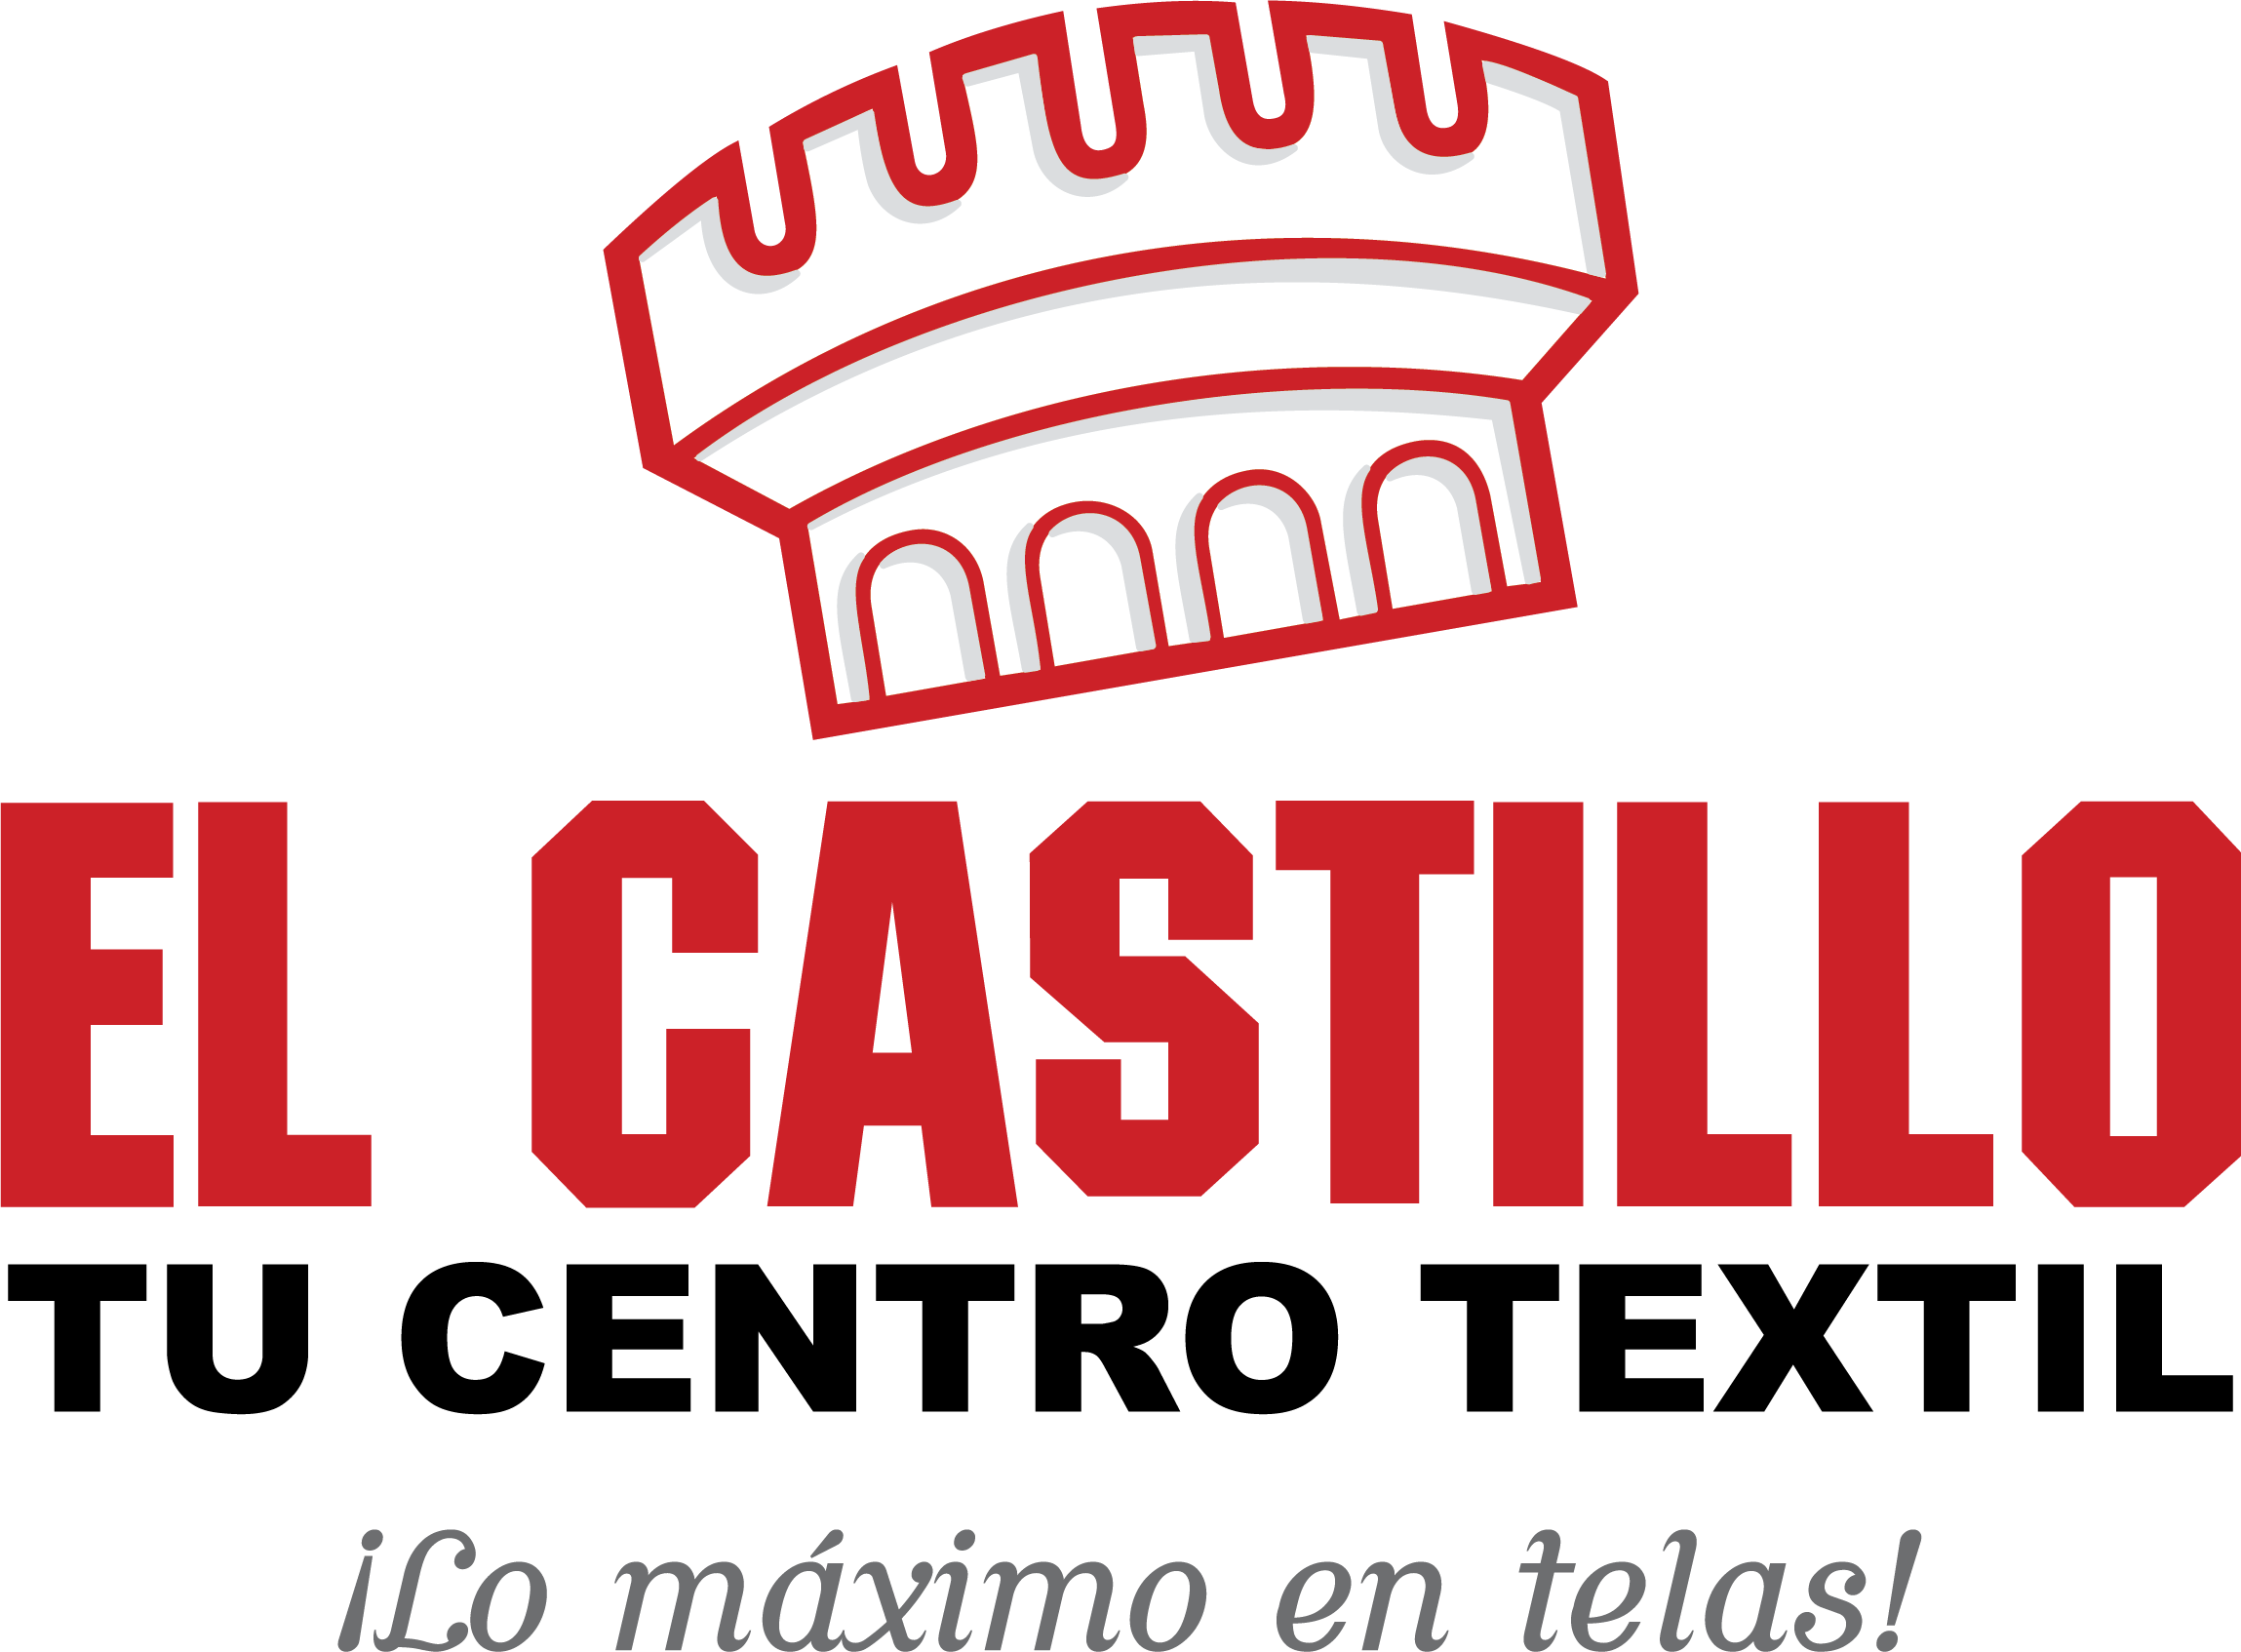 EL CASTILLO